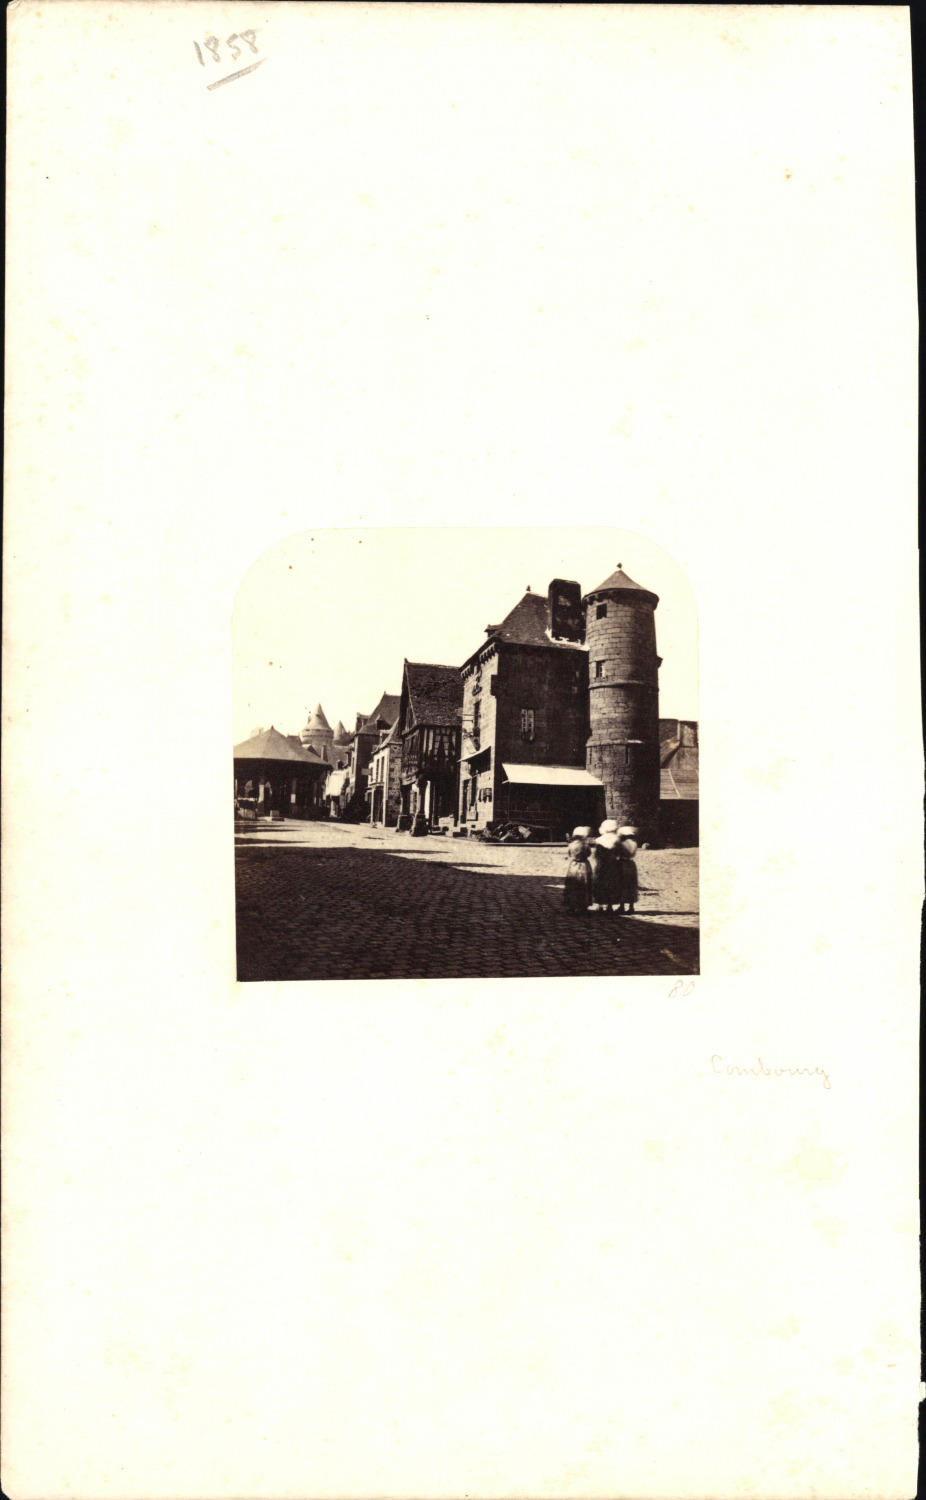 France, Combourg, Place du Marché, Vintage Print, 1858 Narrative of a Walking to